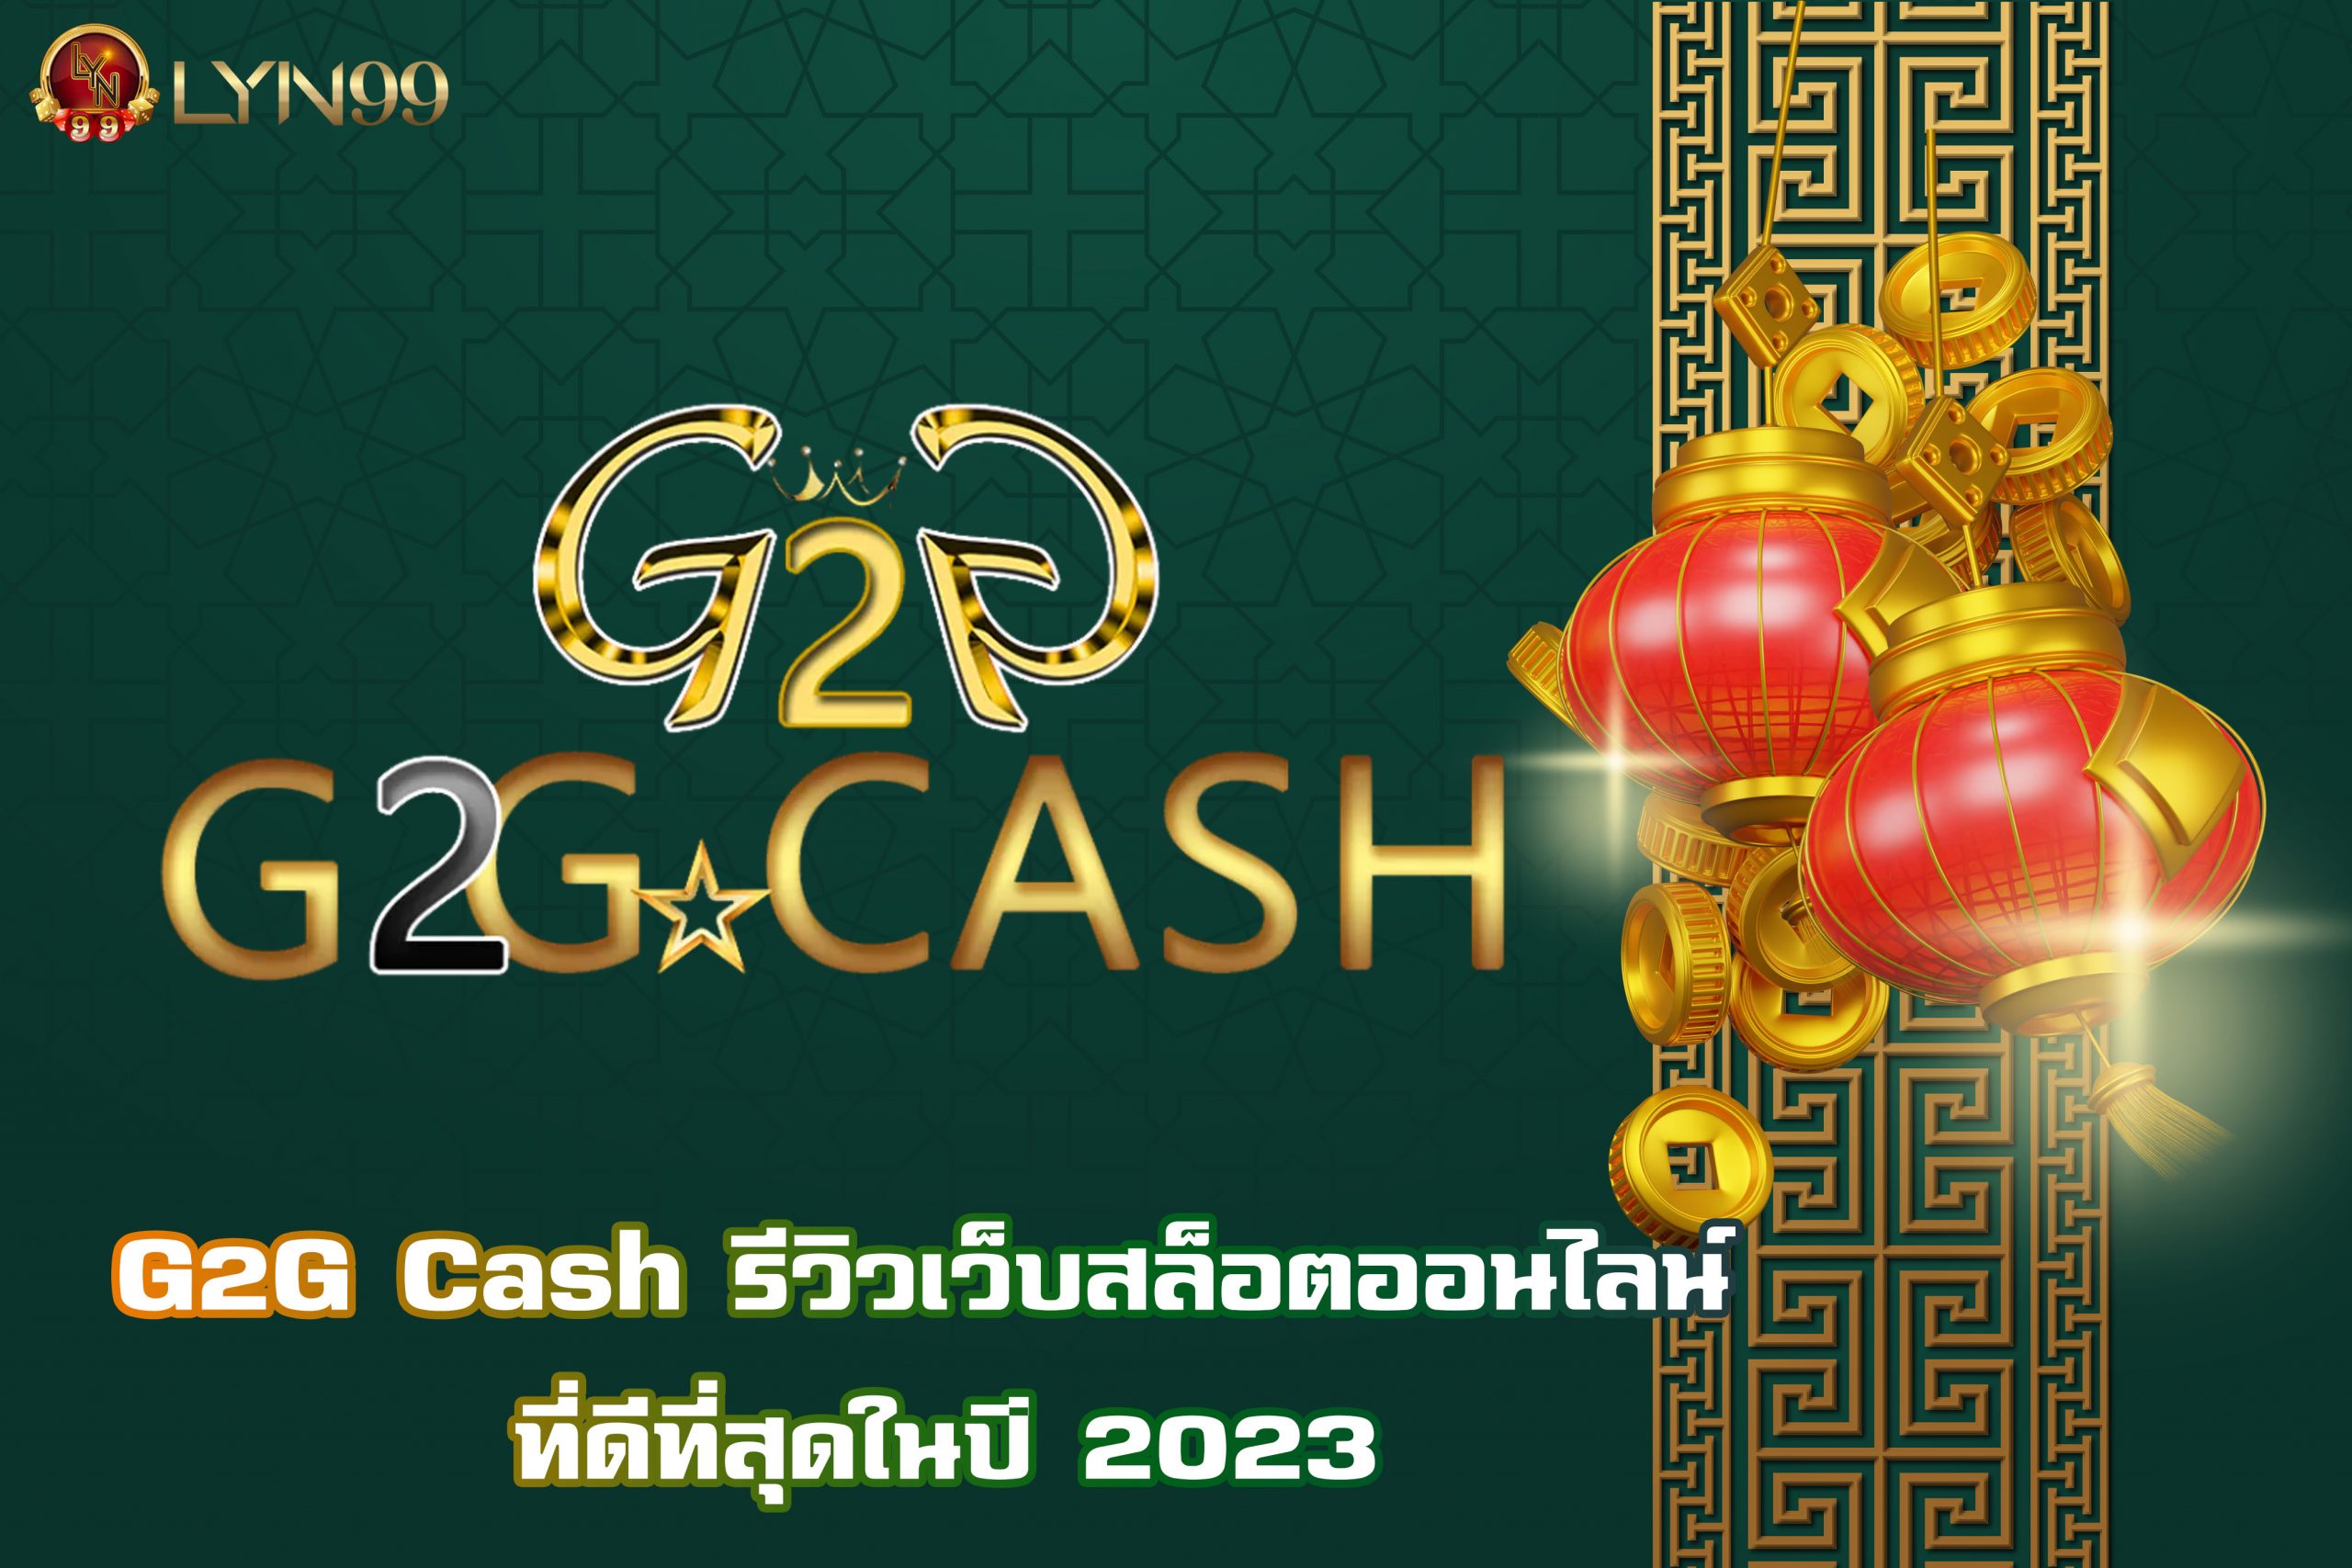 G2G Cash